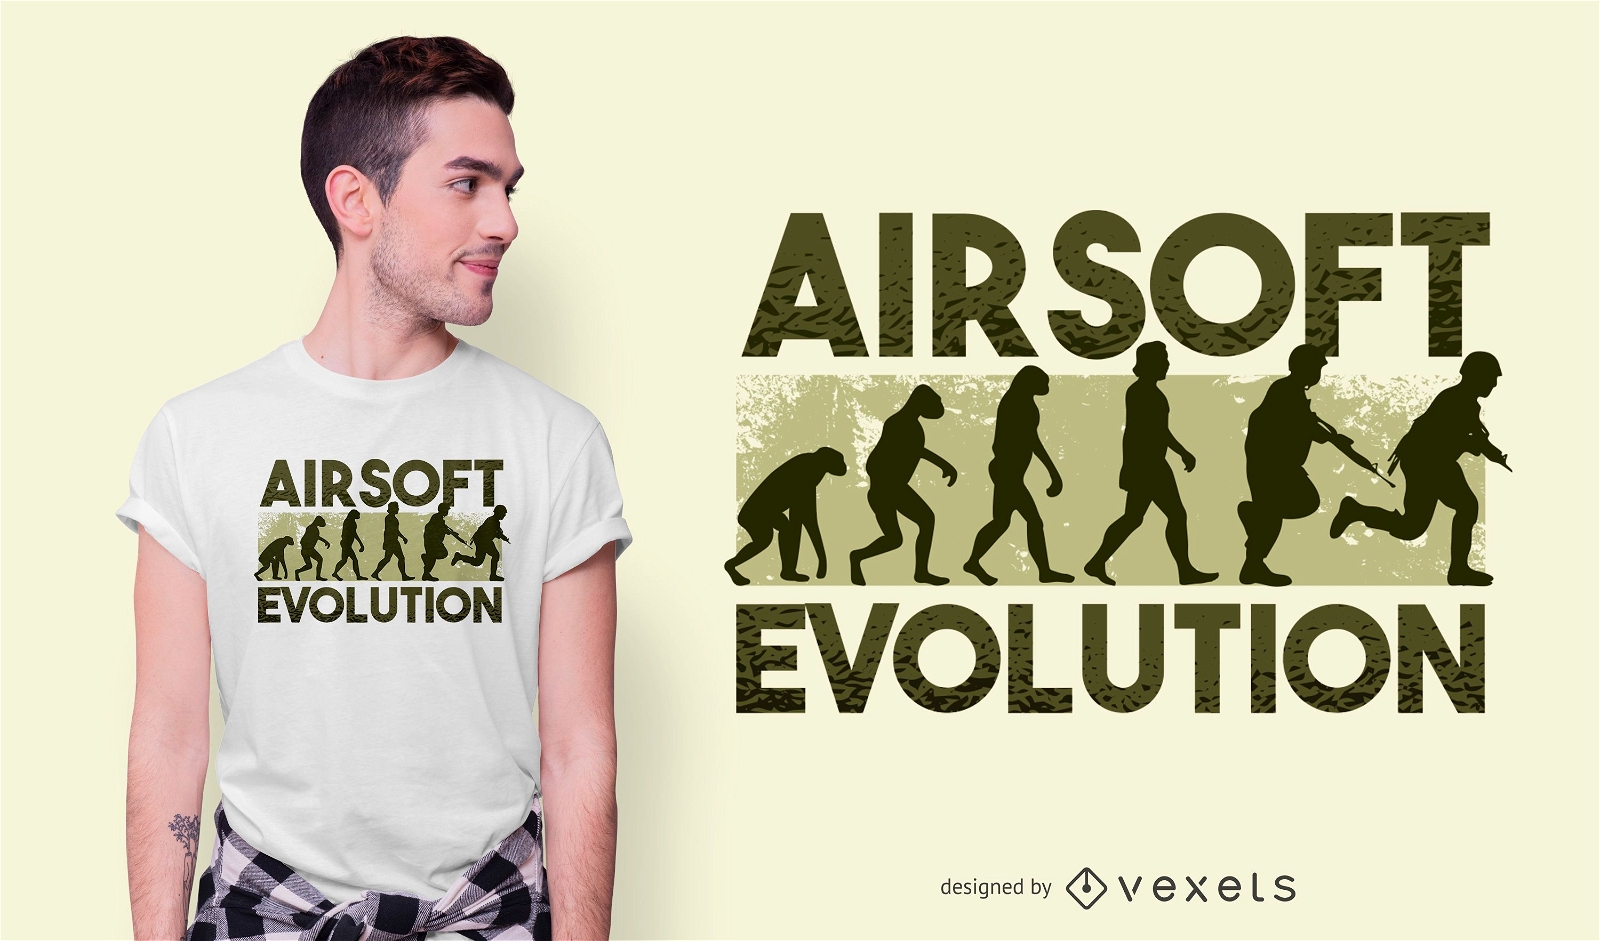 Airsoft evolution t-shirt design